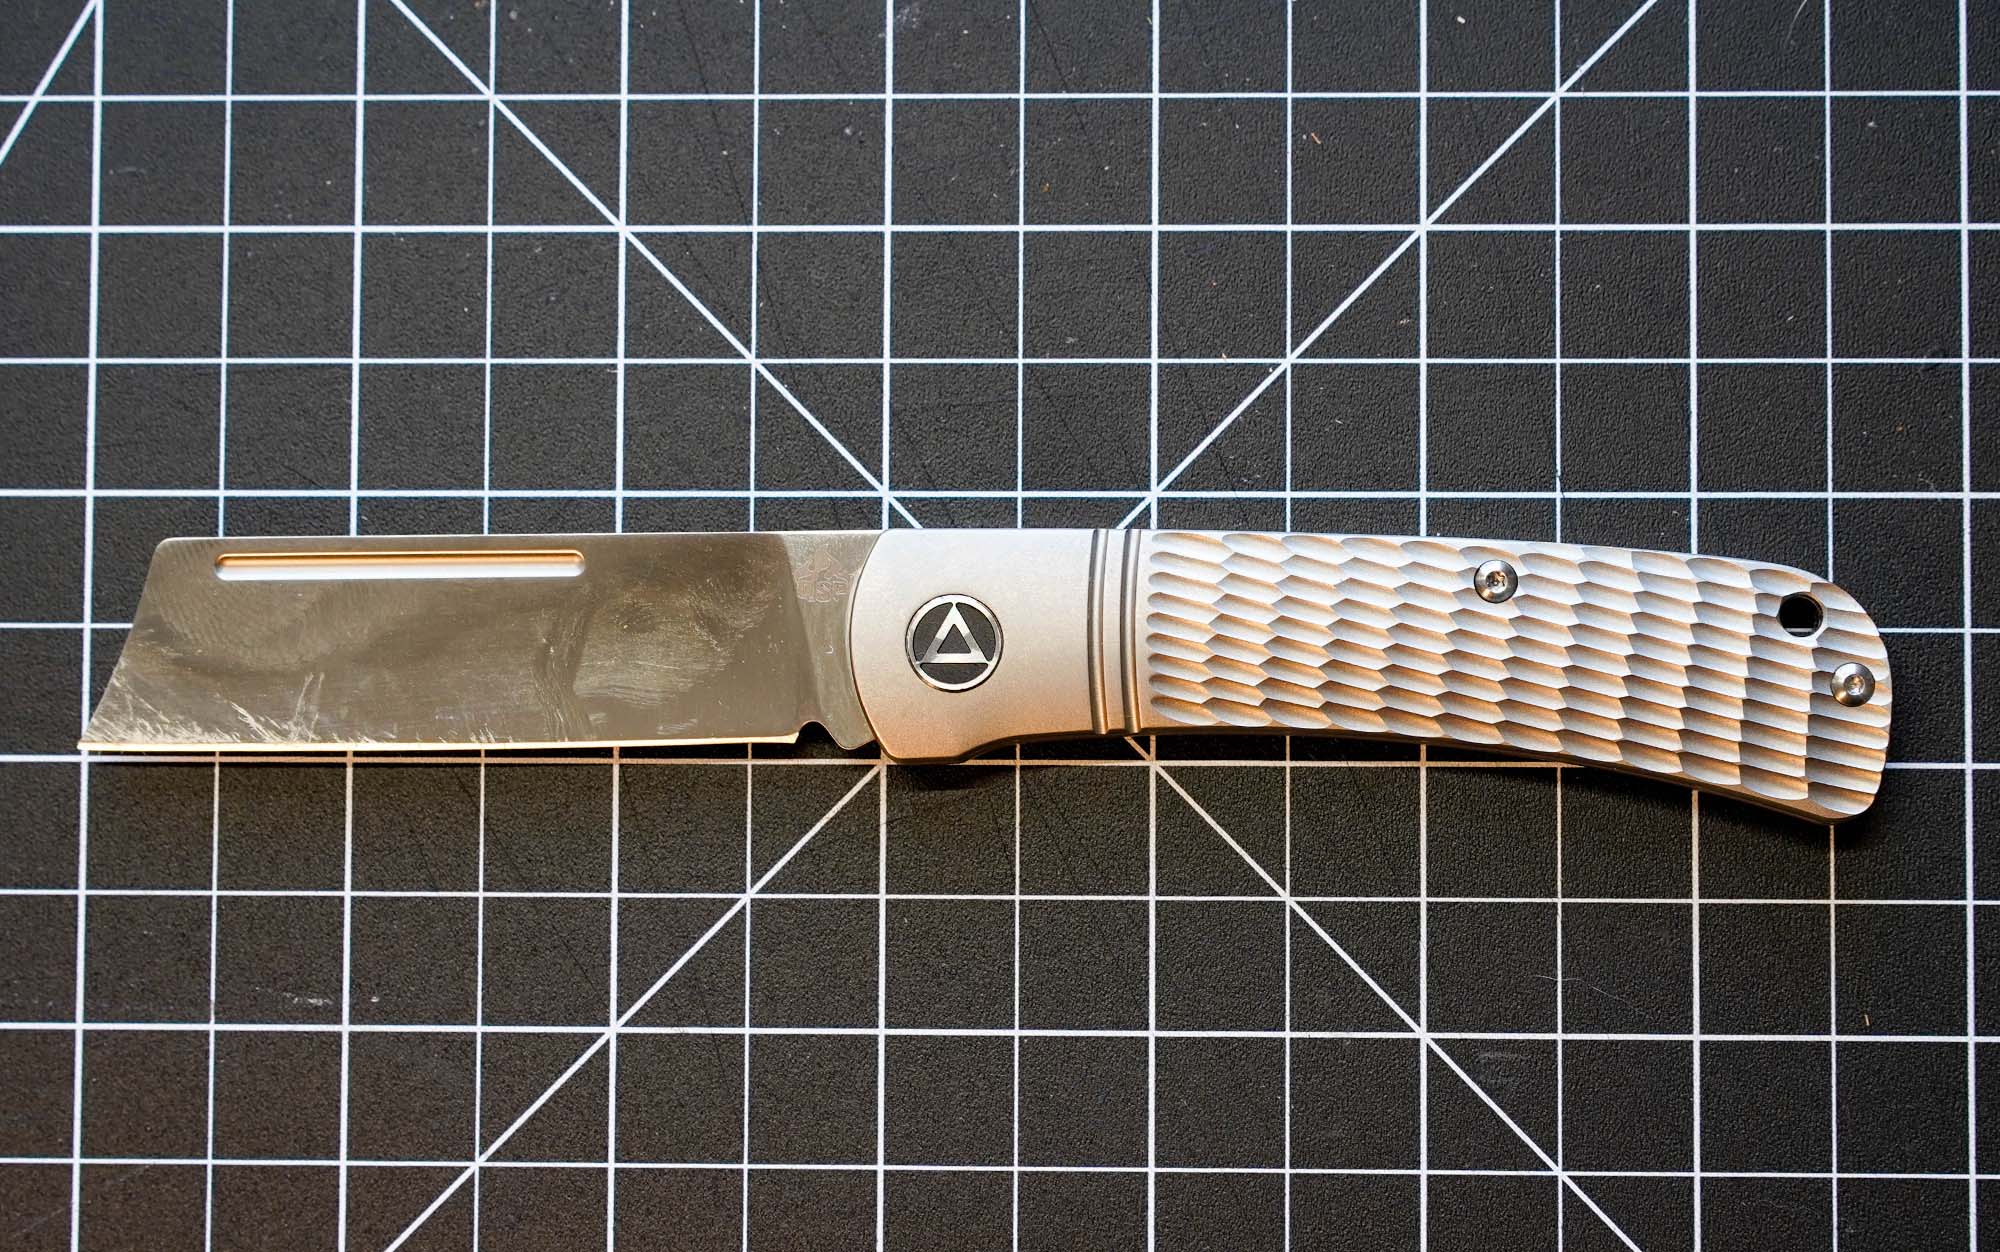 3 Top Knife Sharpening Rods for Recurve Blades